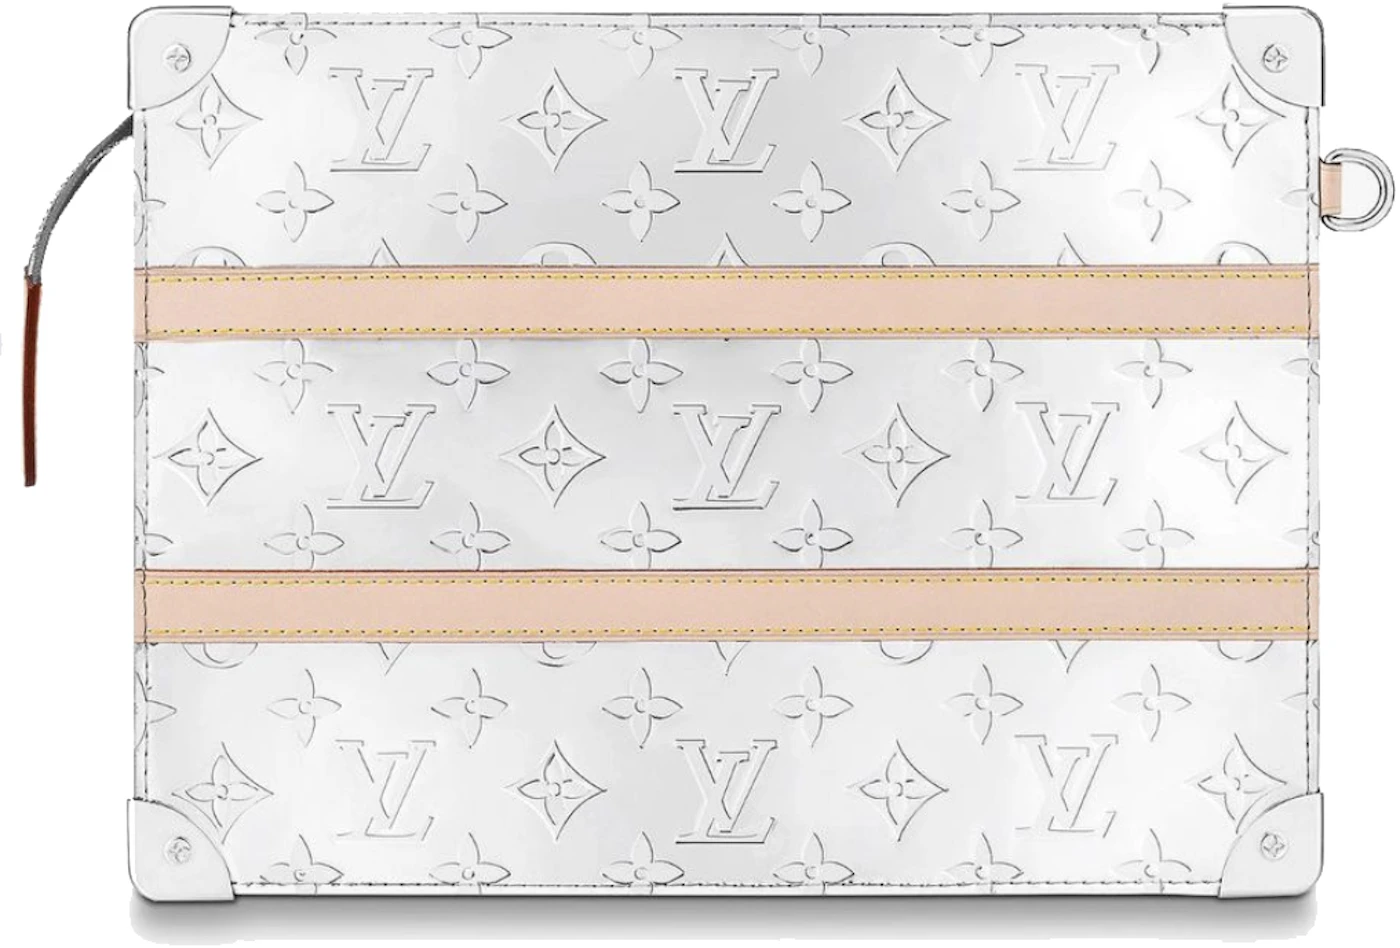 Louis Vuitton Limited Edition Silver Monogram Miroir Handle Trunk